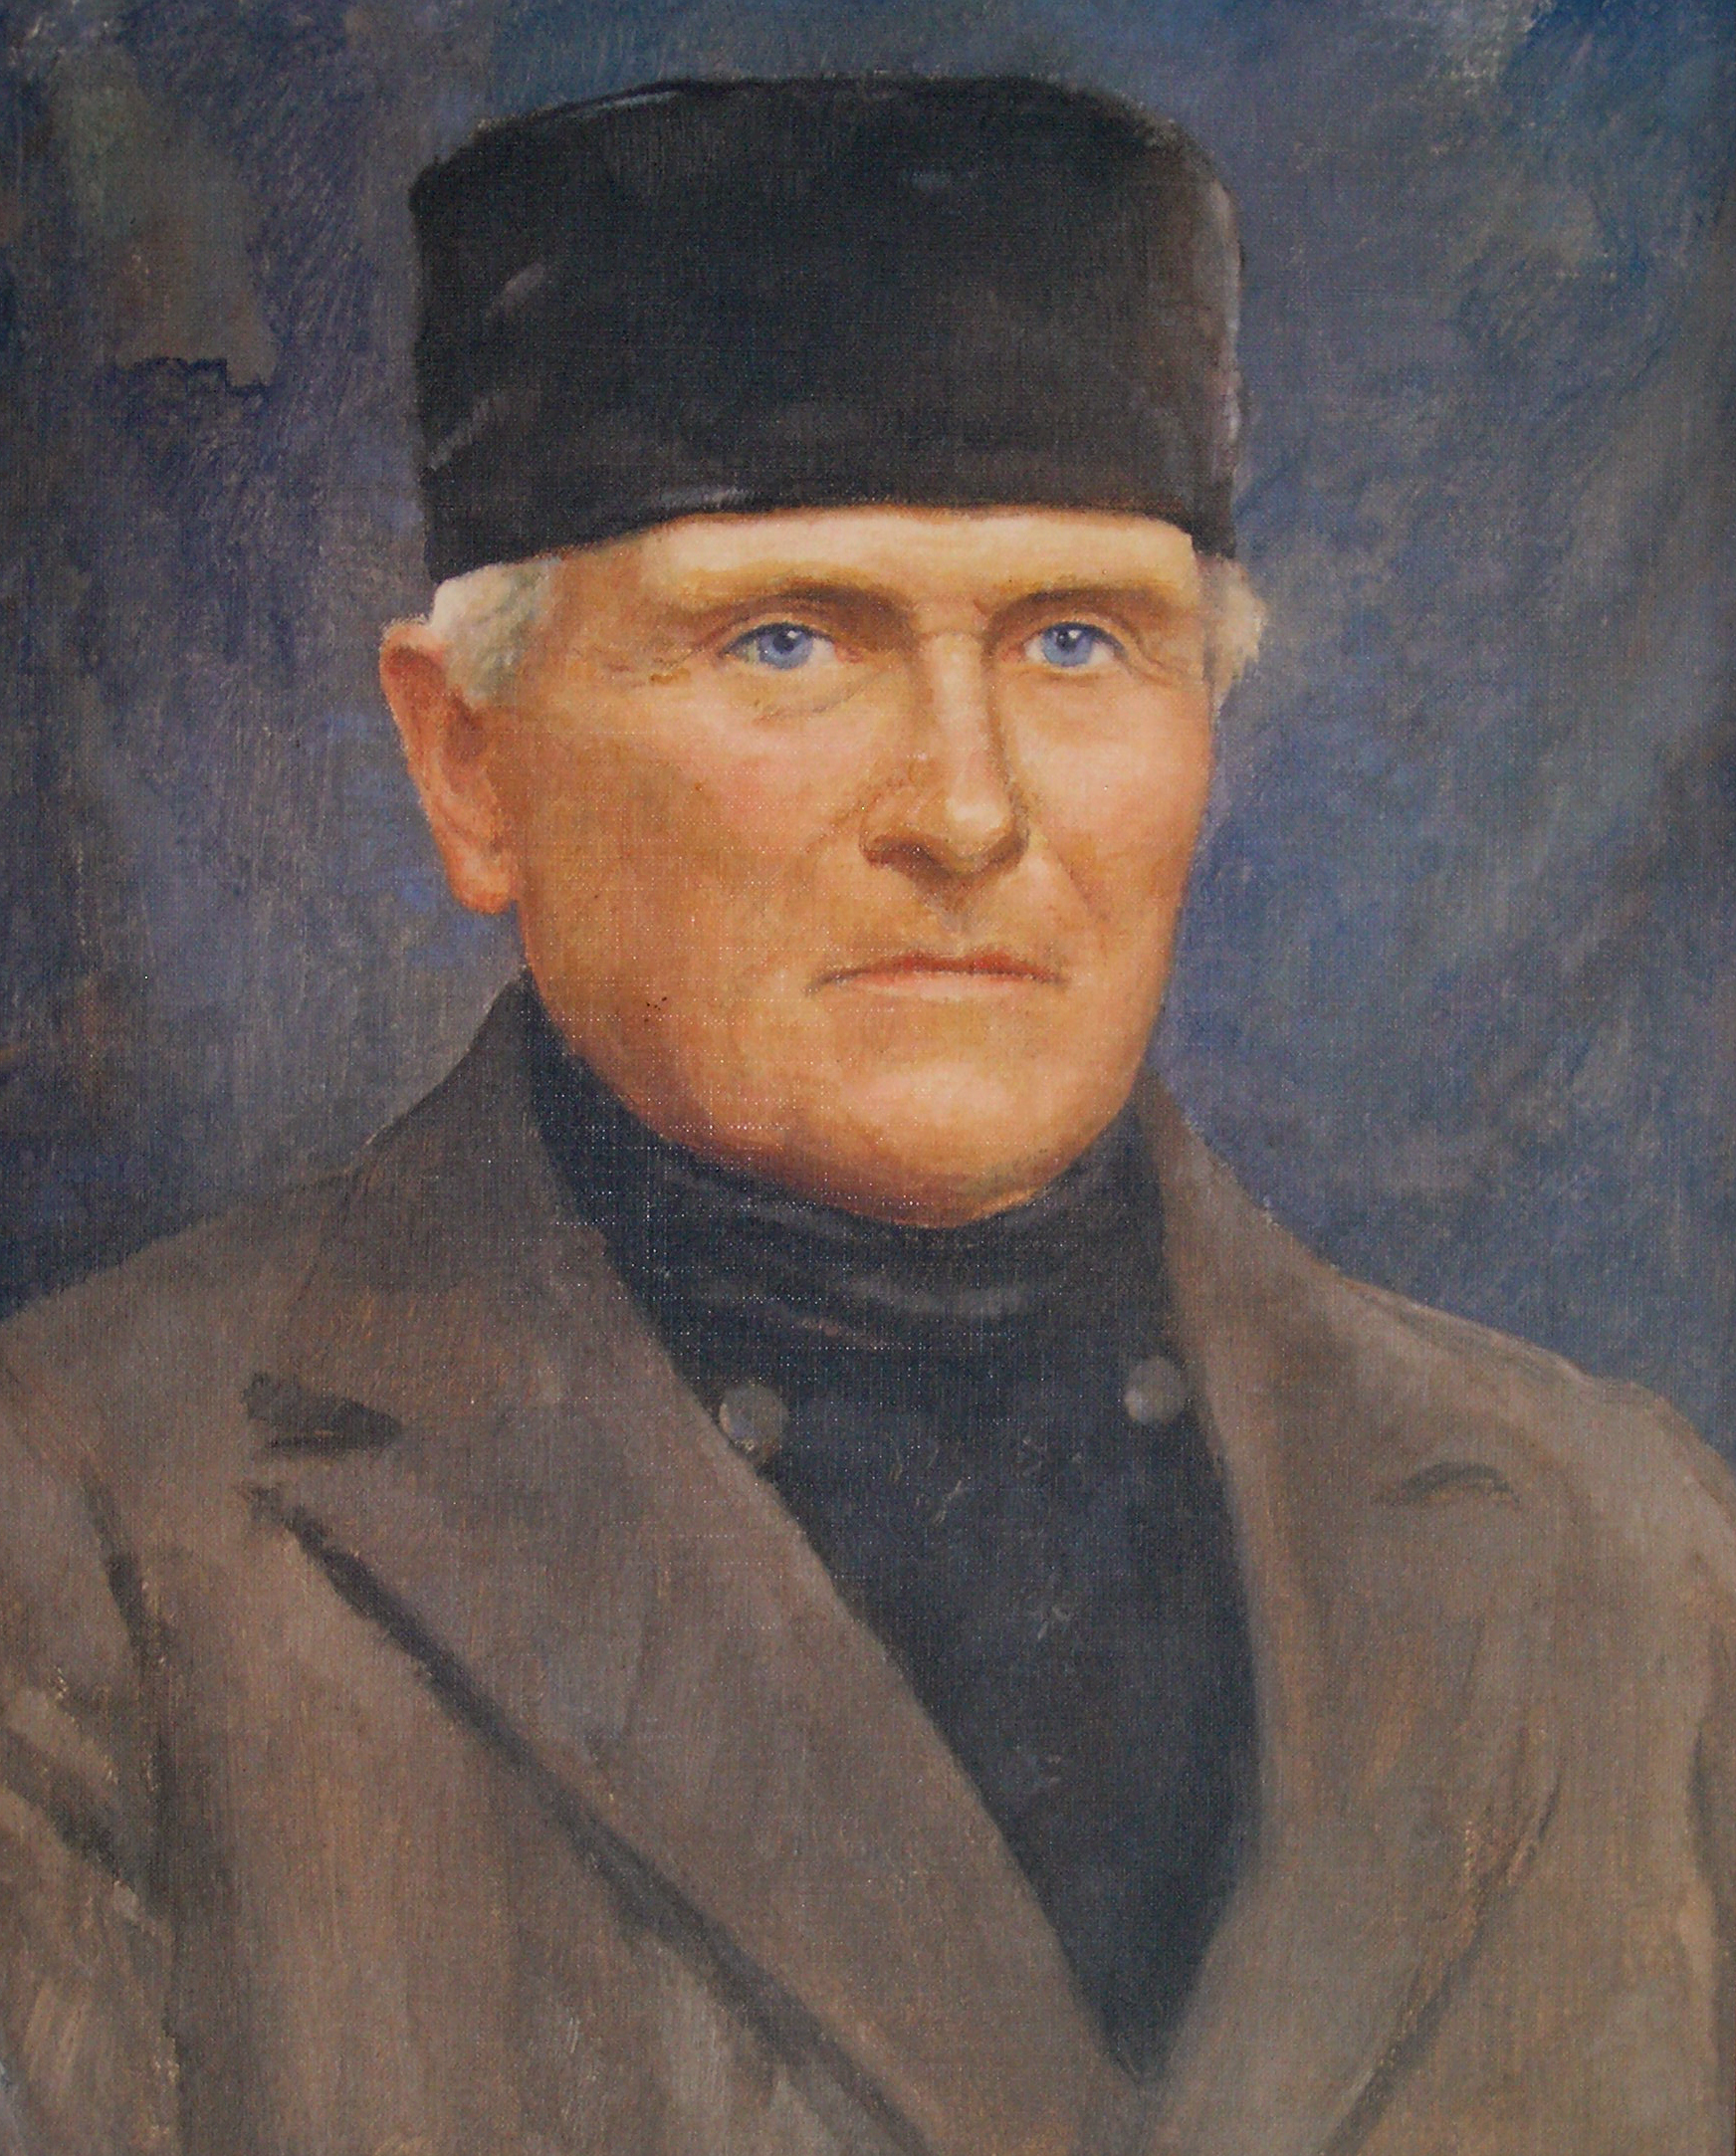 Osnivač tvrtke Matthias Christian Rabbethge (1804. - 1902.)